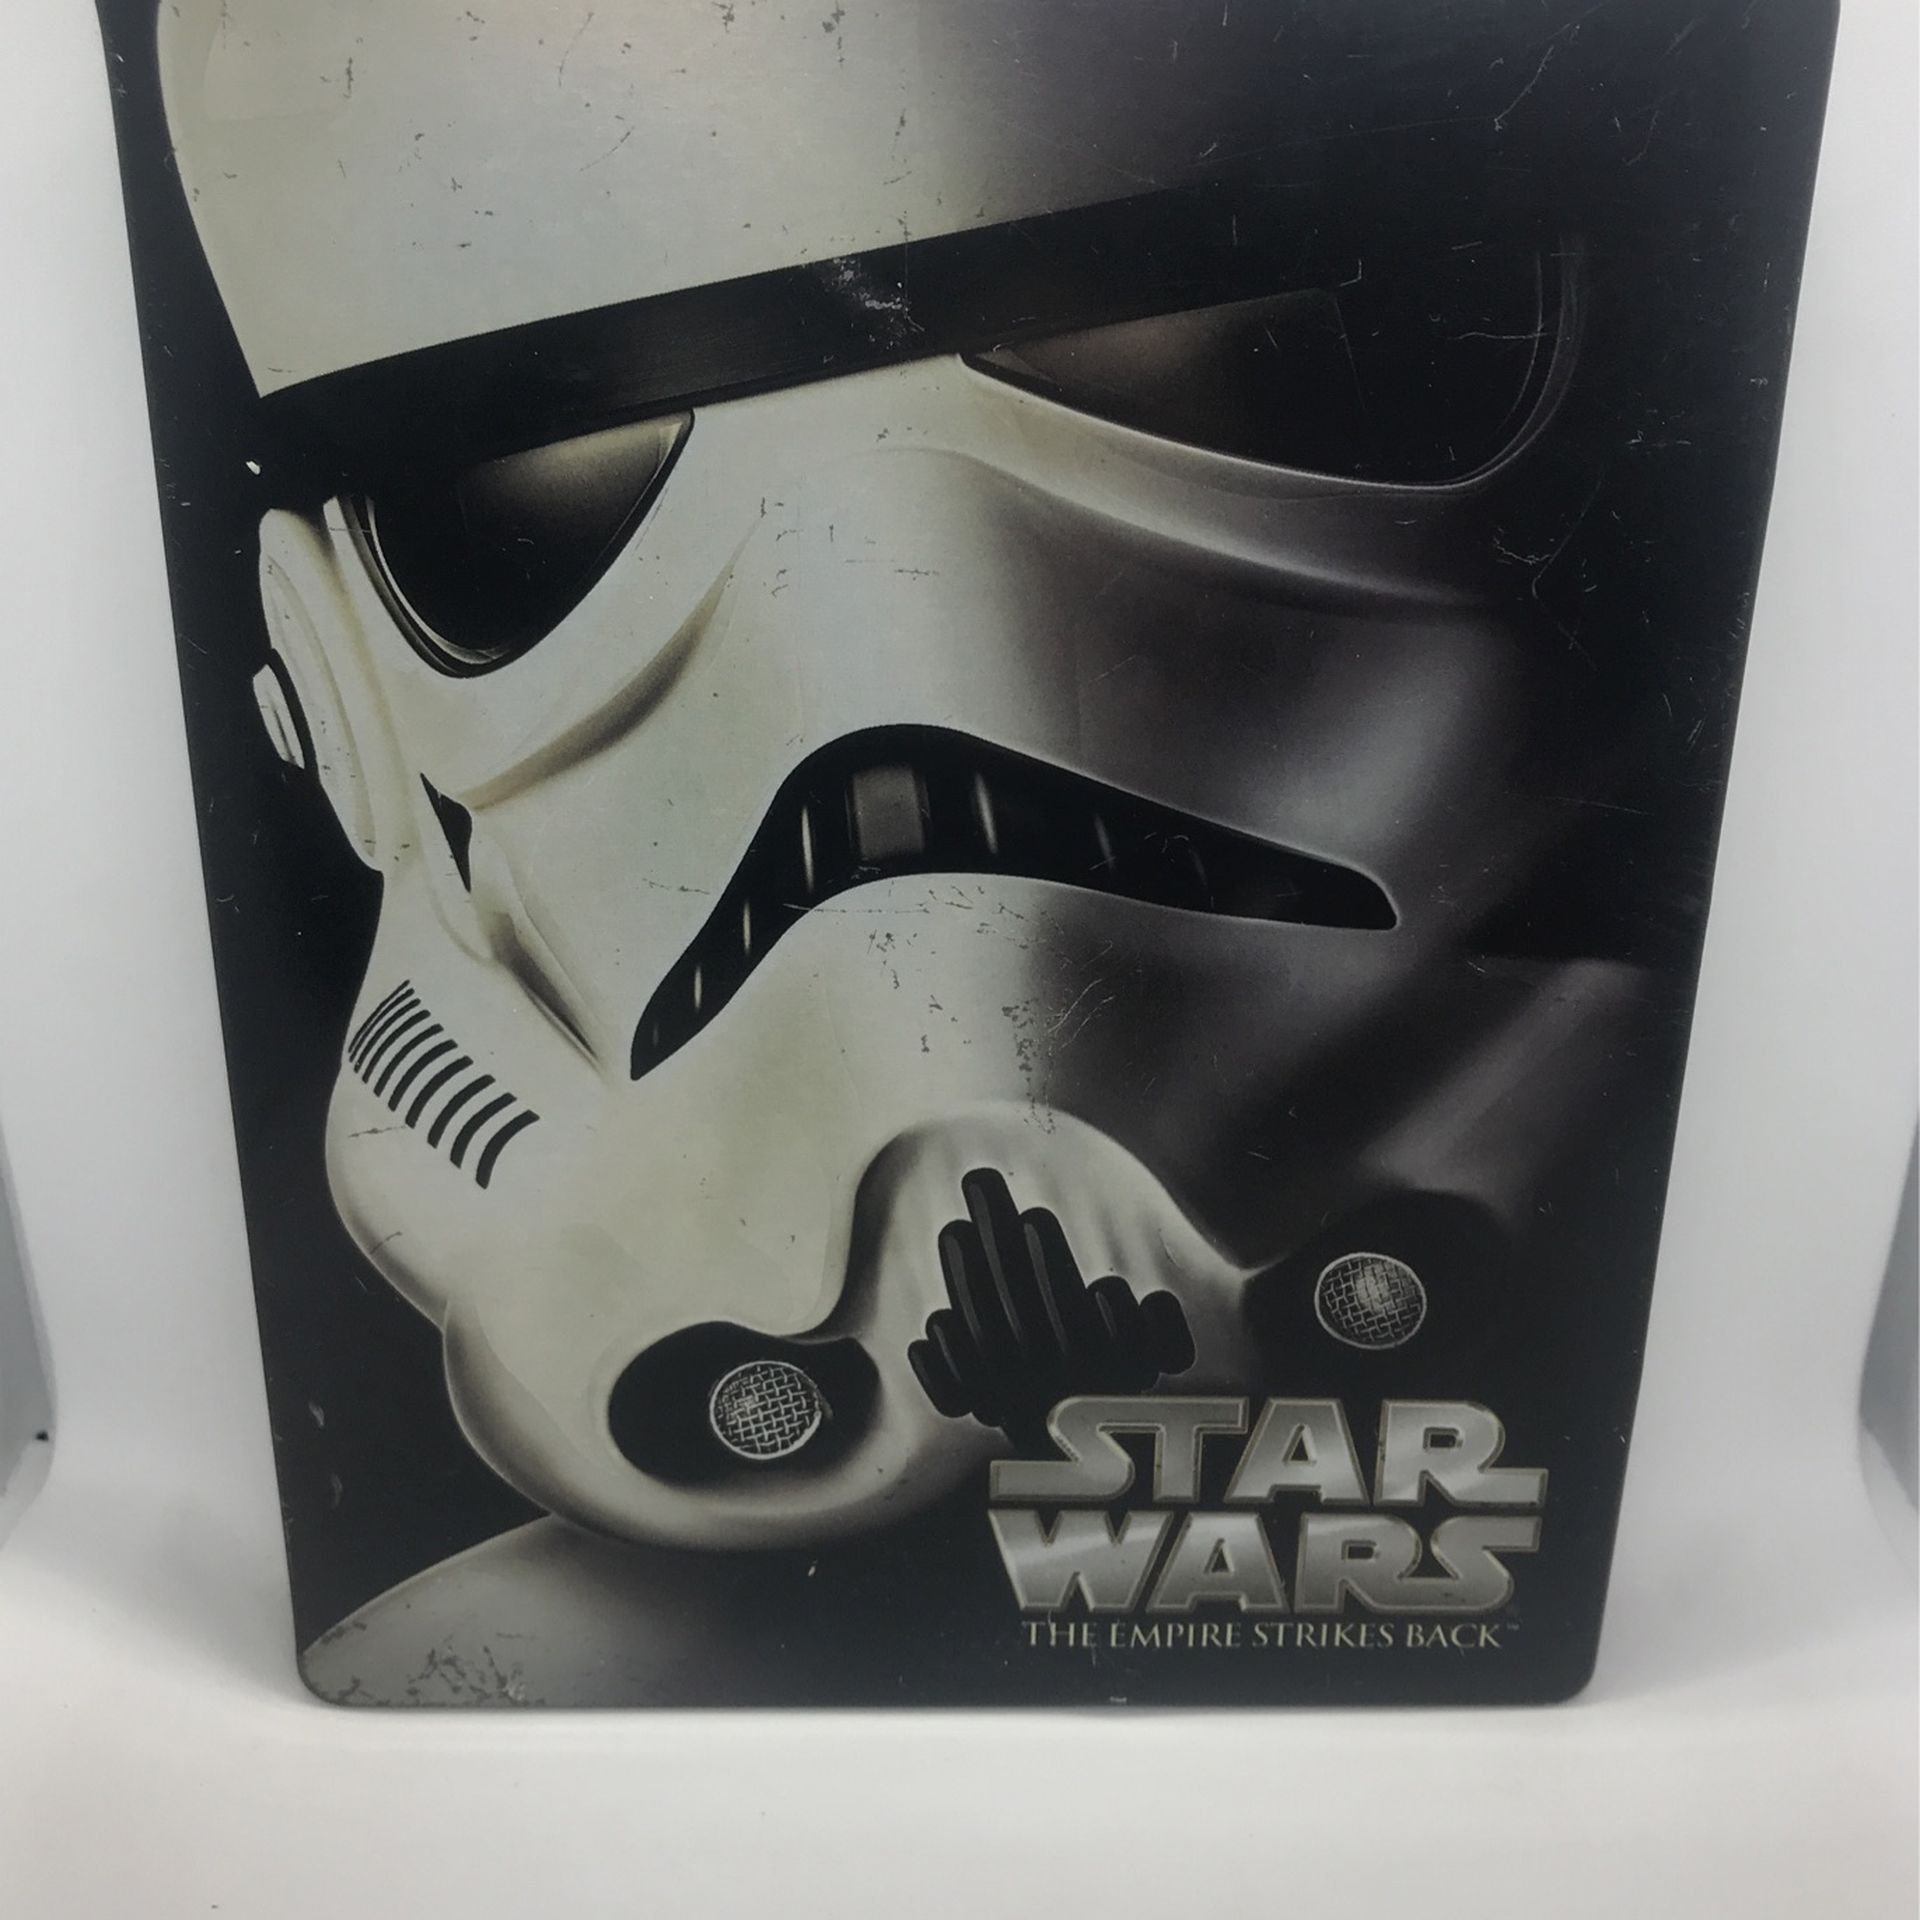 Star Wars The Empire Strikes Back Steelbook Blu-ray